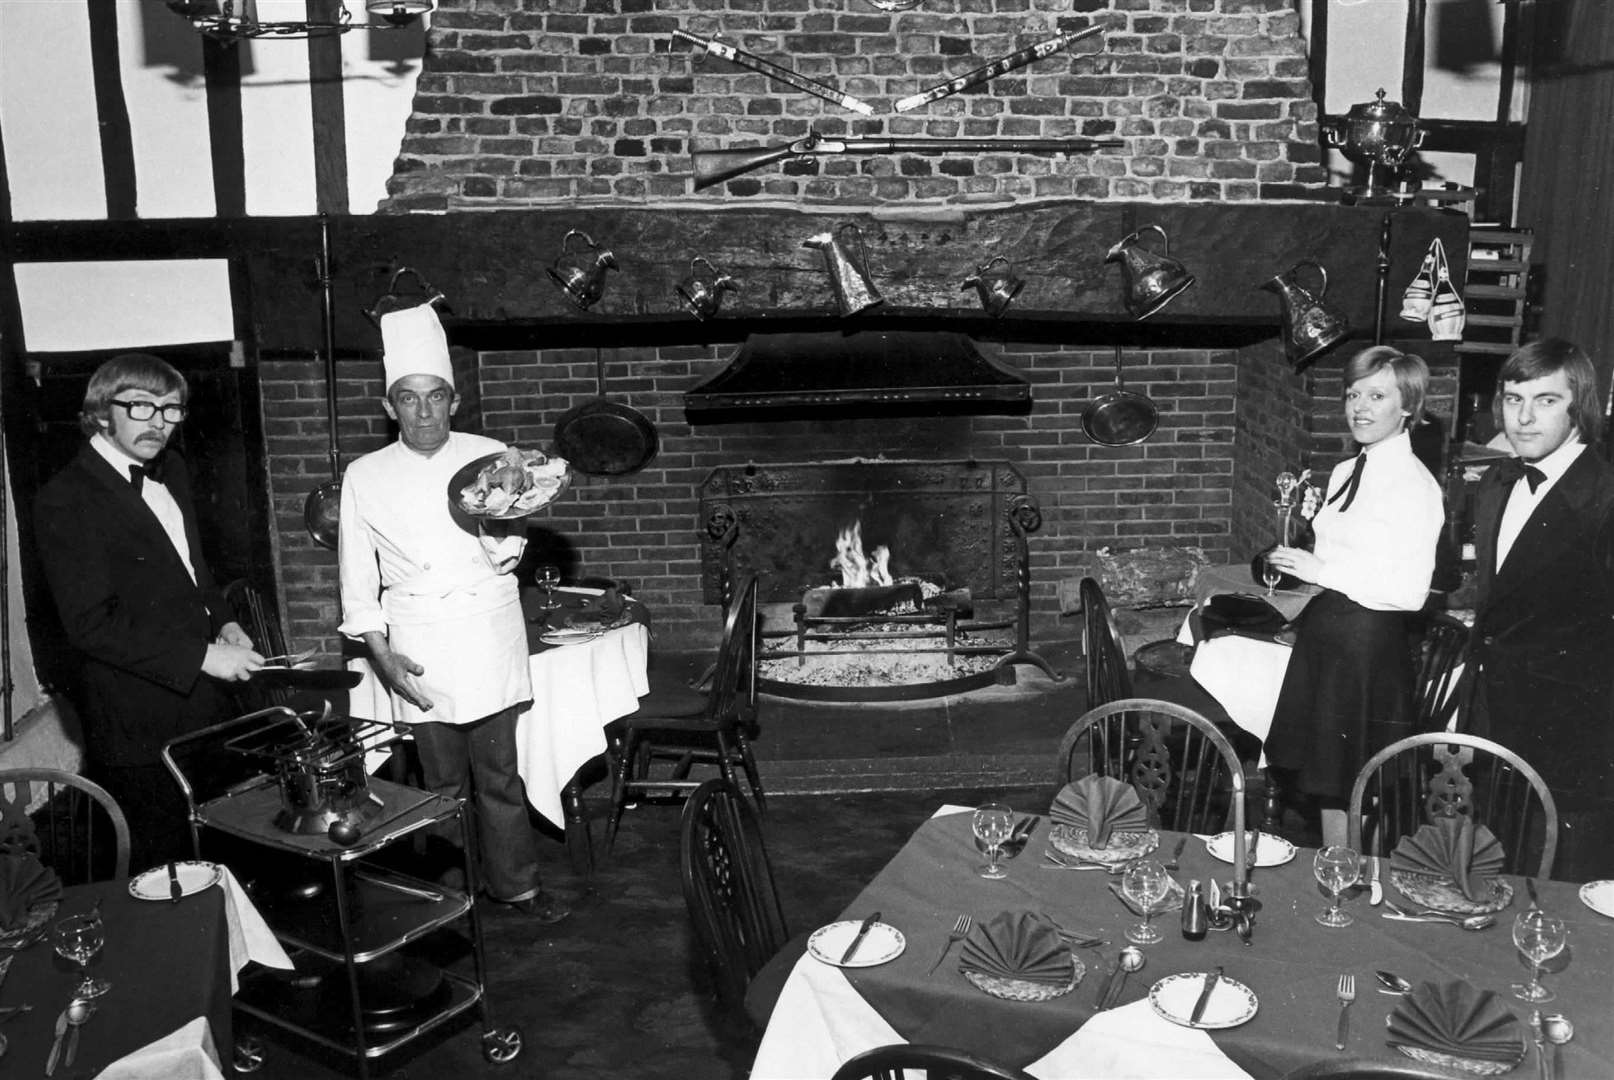 Inside the George Hotel Restaurant at Cranbrook in September 1976